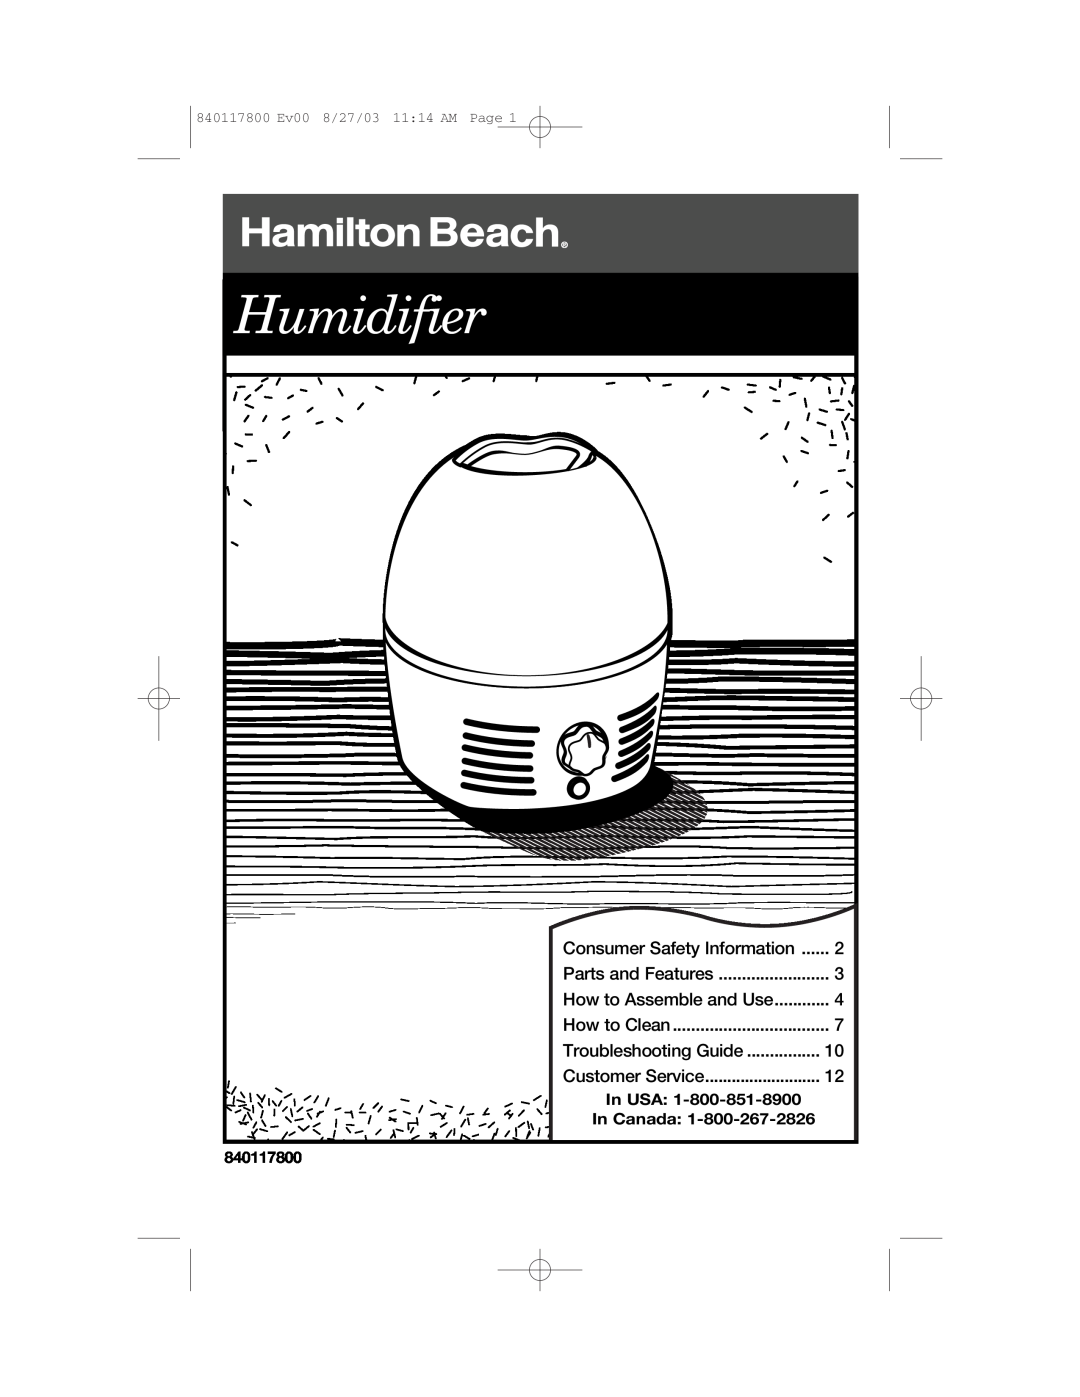 Hamilton Beach manual Humidifier, Consumer Safety Information, 840117800 Ev00 8/27/03 11 14 AM Page 